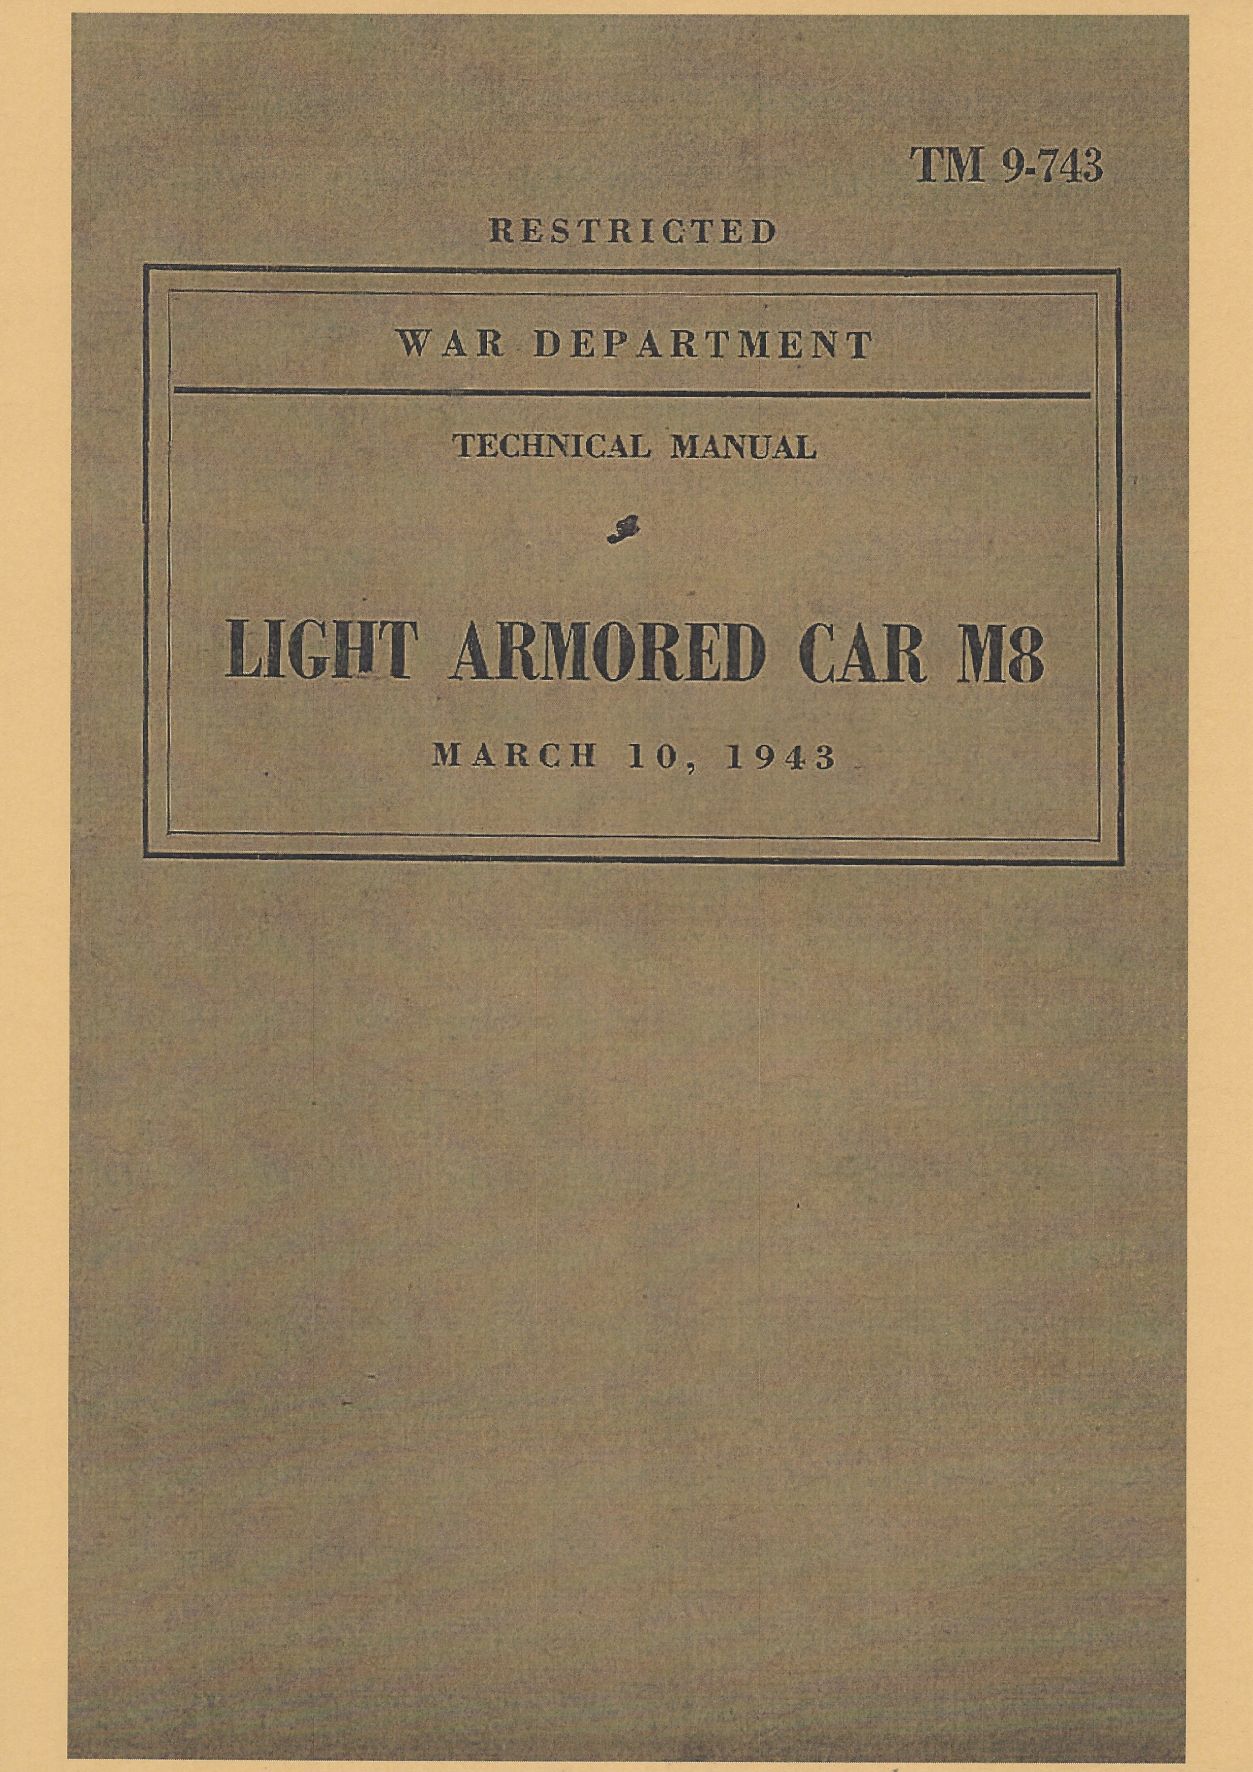 TM 9-743 US LIGHT ARMORED CAR M8